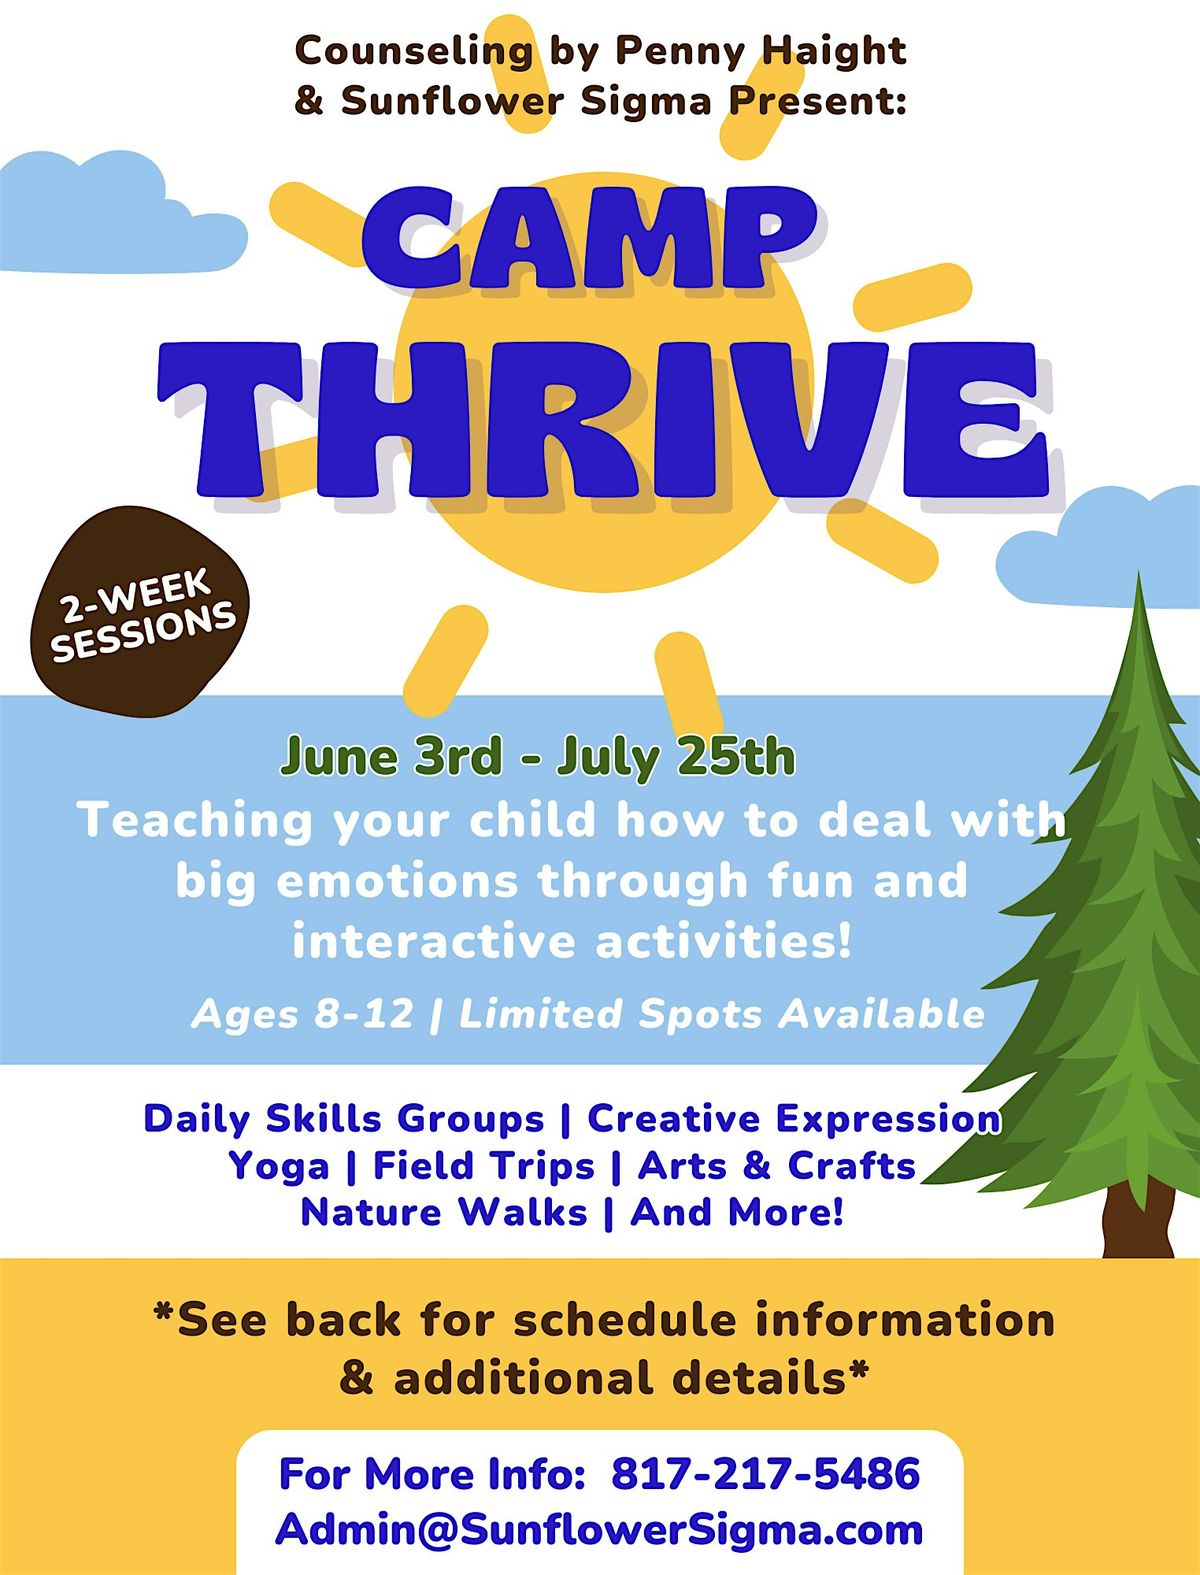 Camp Thrive